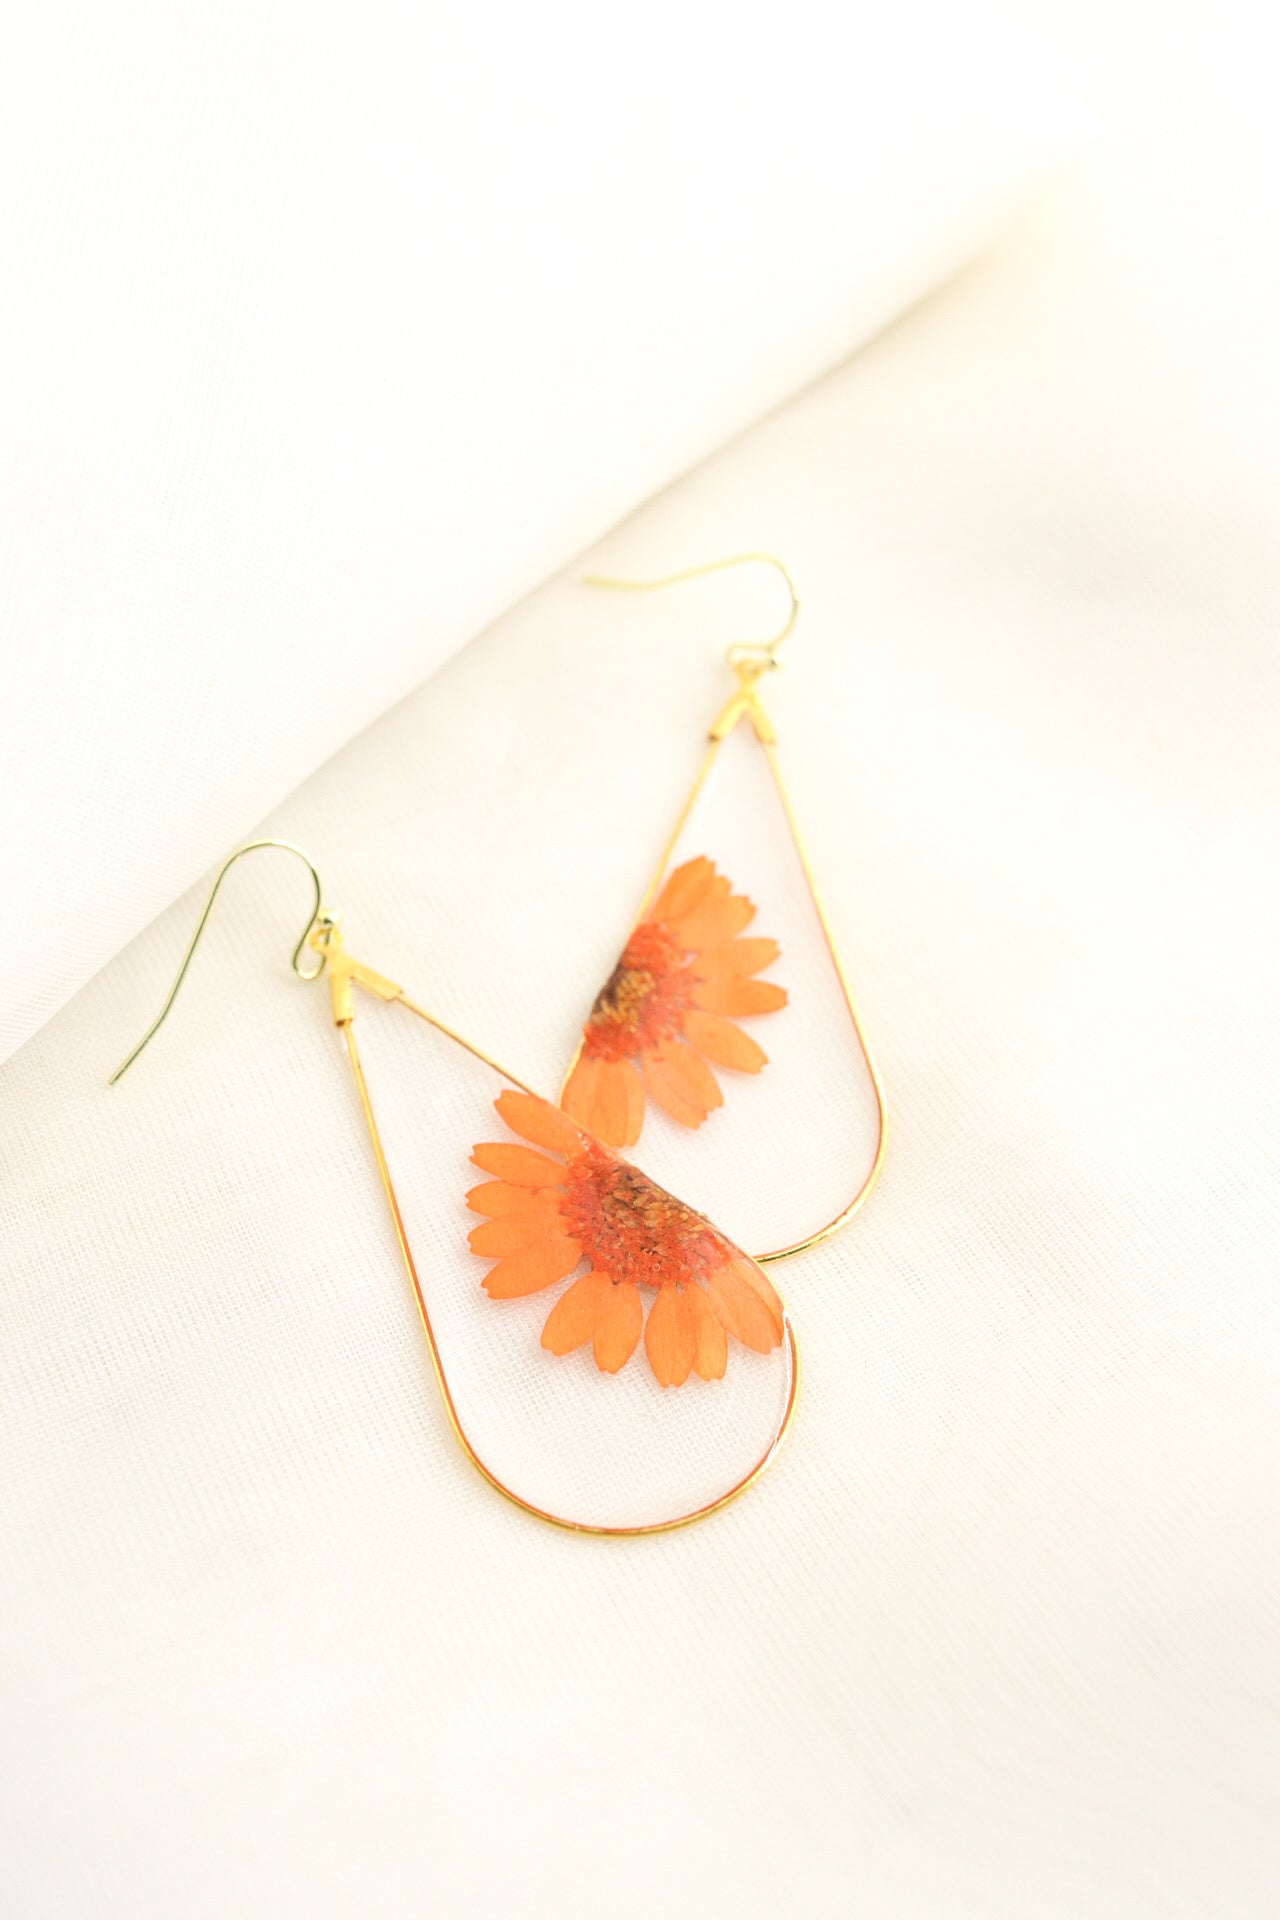 Orange Split Daisy Teardrop Flower Earrings, Pressed Wildflower Resin Earrings, Botanical Nature Jewelry Gift For Her